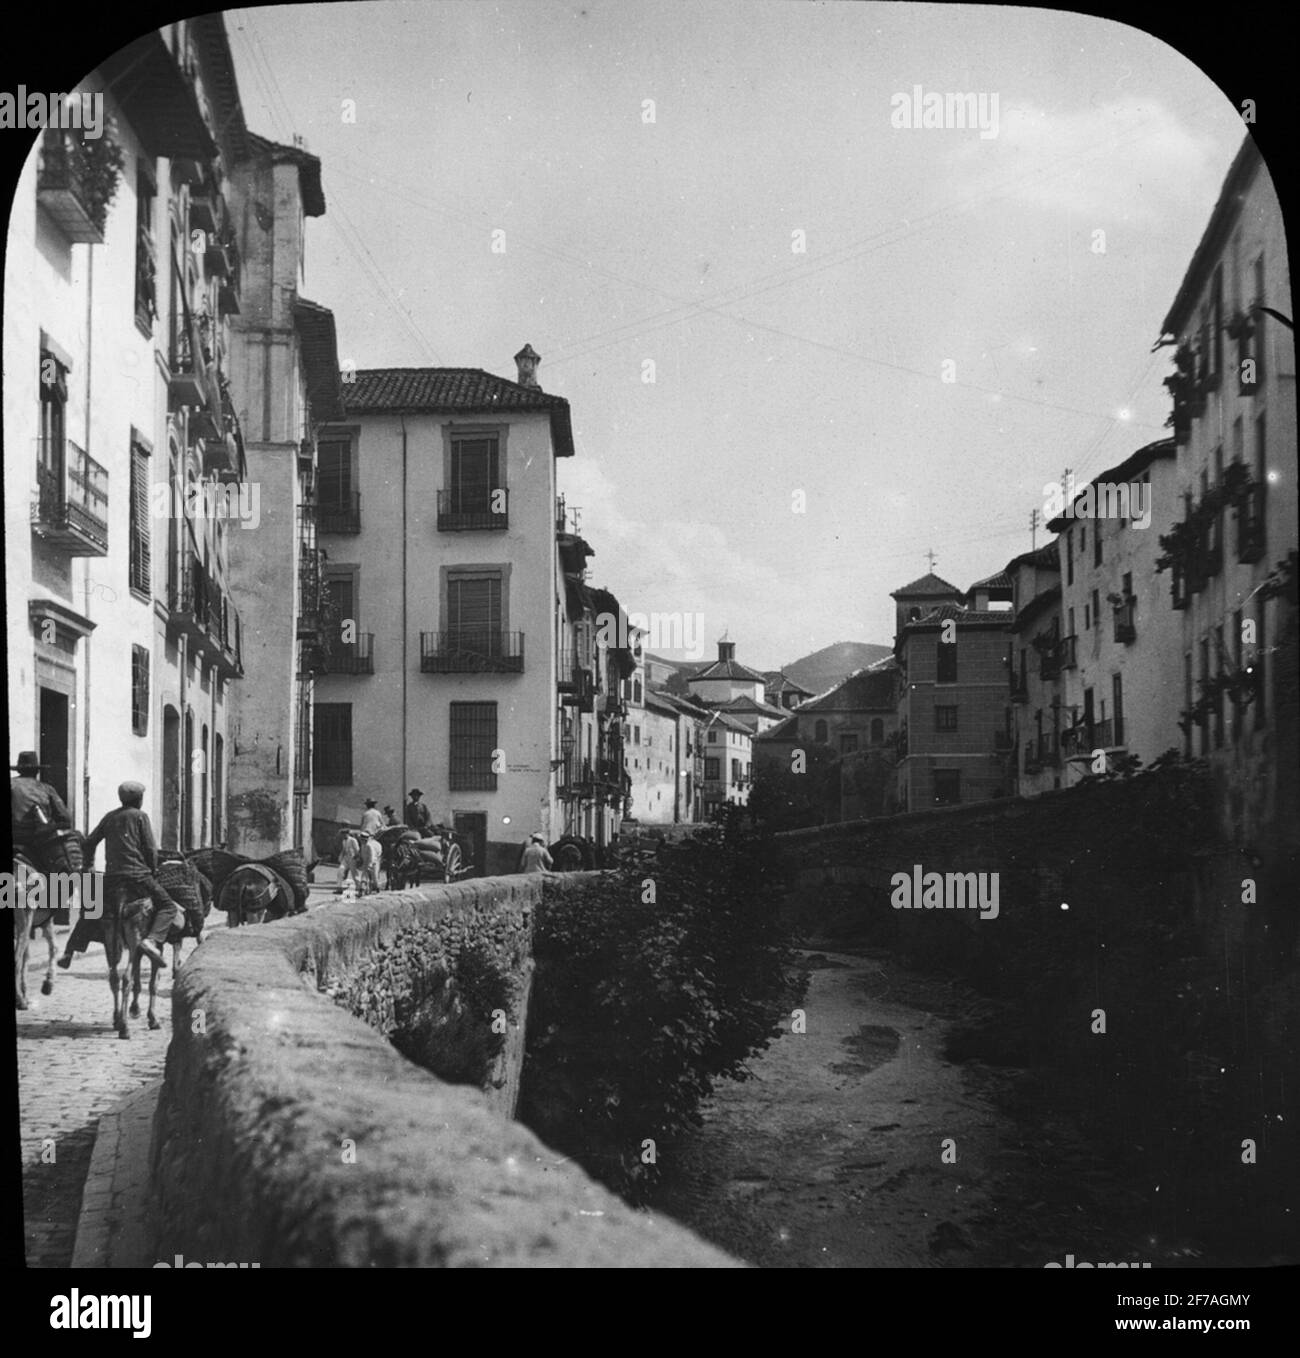 SkiopT icon image with motifs of the street Carra del Darro, Granada.The image has been stored in cardboard labeled: Höstesan 1910. Granada 9. No 25. Text on image: 'Carra del Darro'. Stock Photo